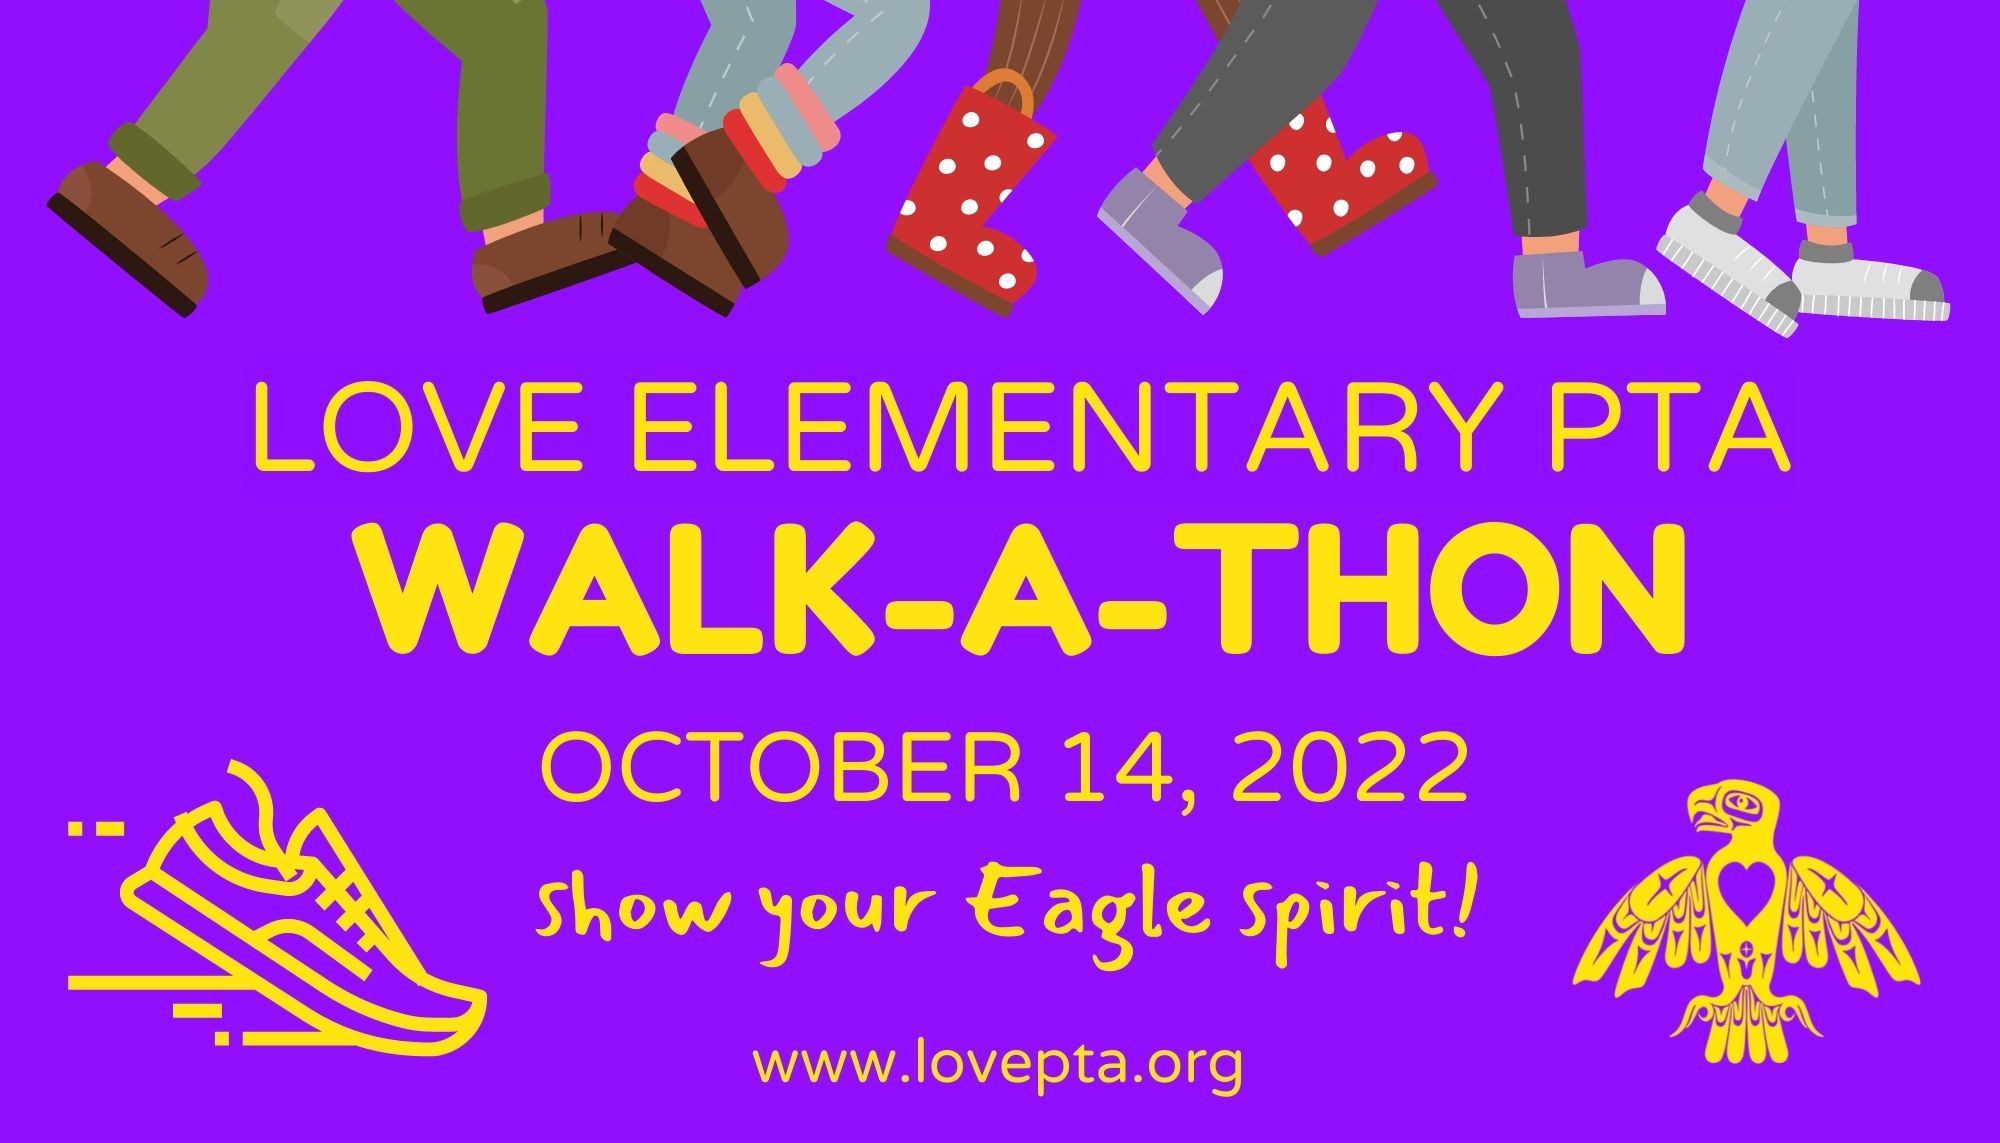 WalkaThon October 14, 2022 Love Elementary PTA